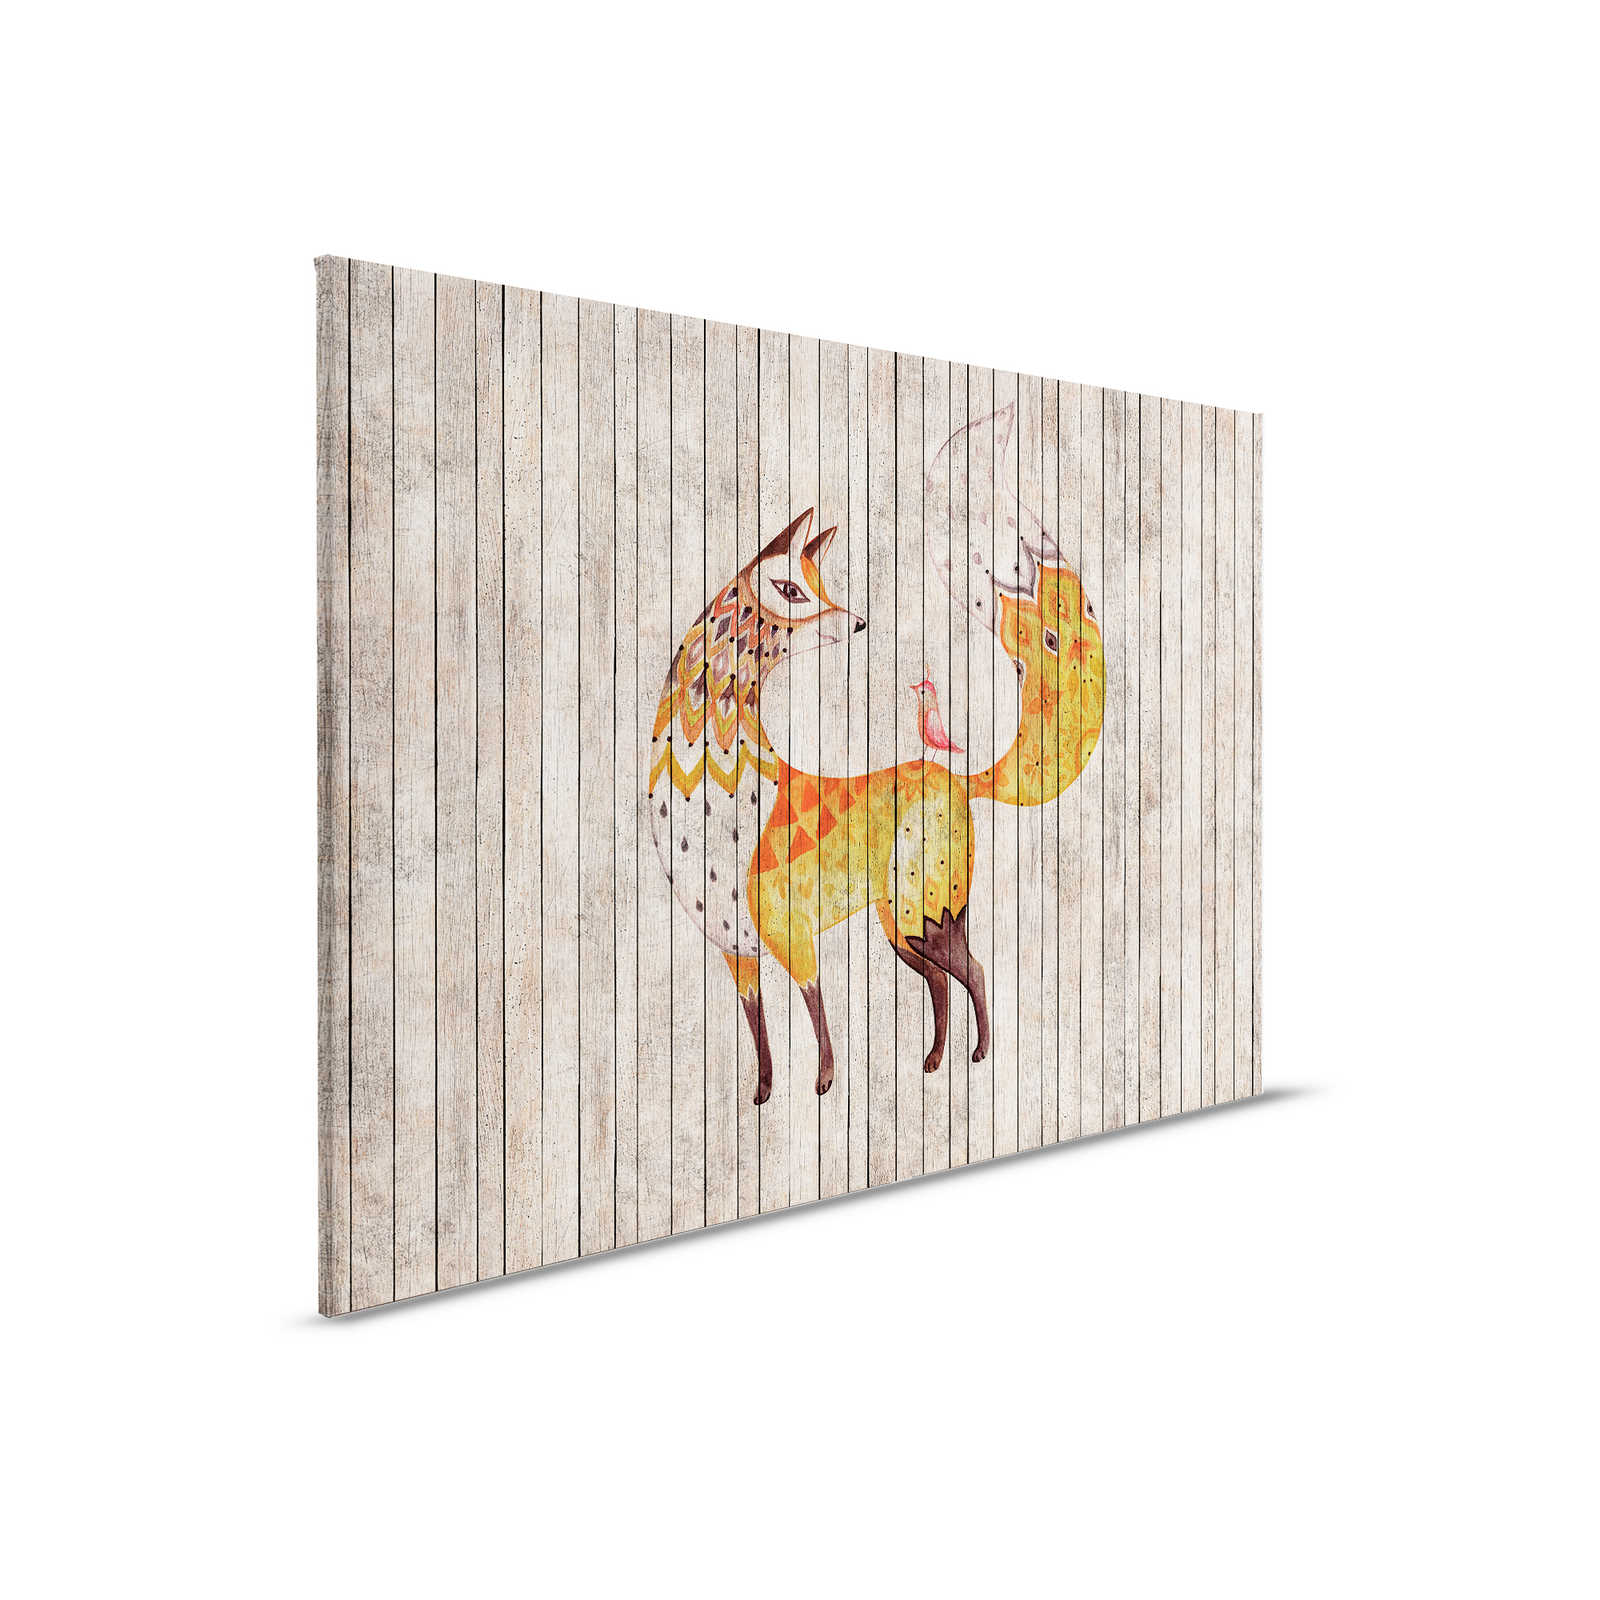         Fairy tale 2 - Fuchs und Vogel auf Holzoptik Leinwandbild – 0,90 m x 0,60 m
    